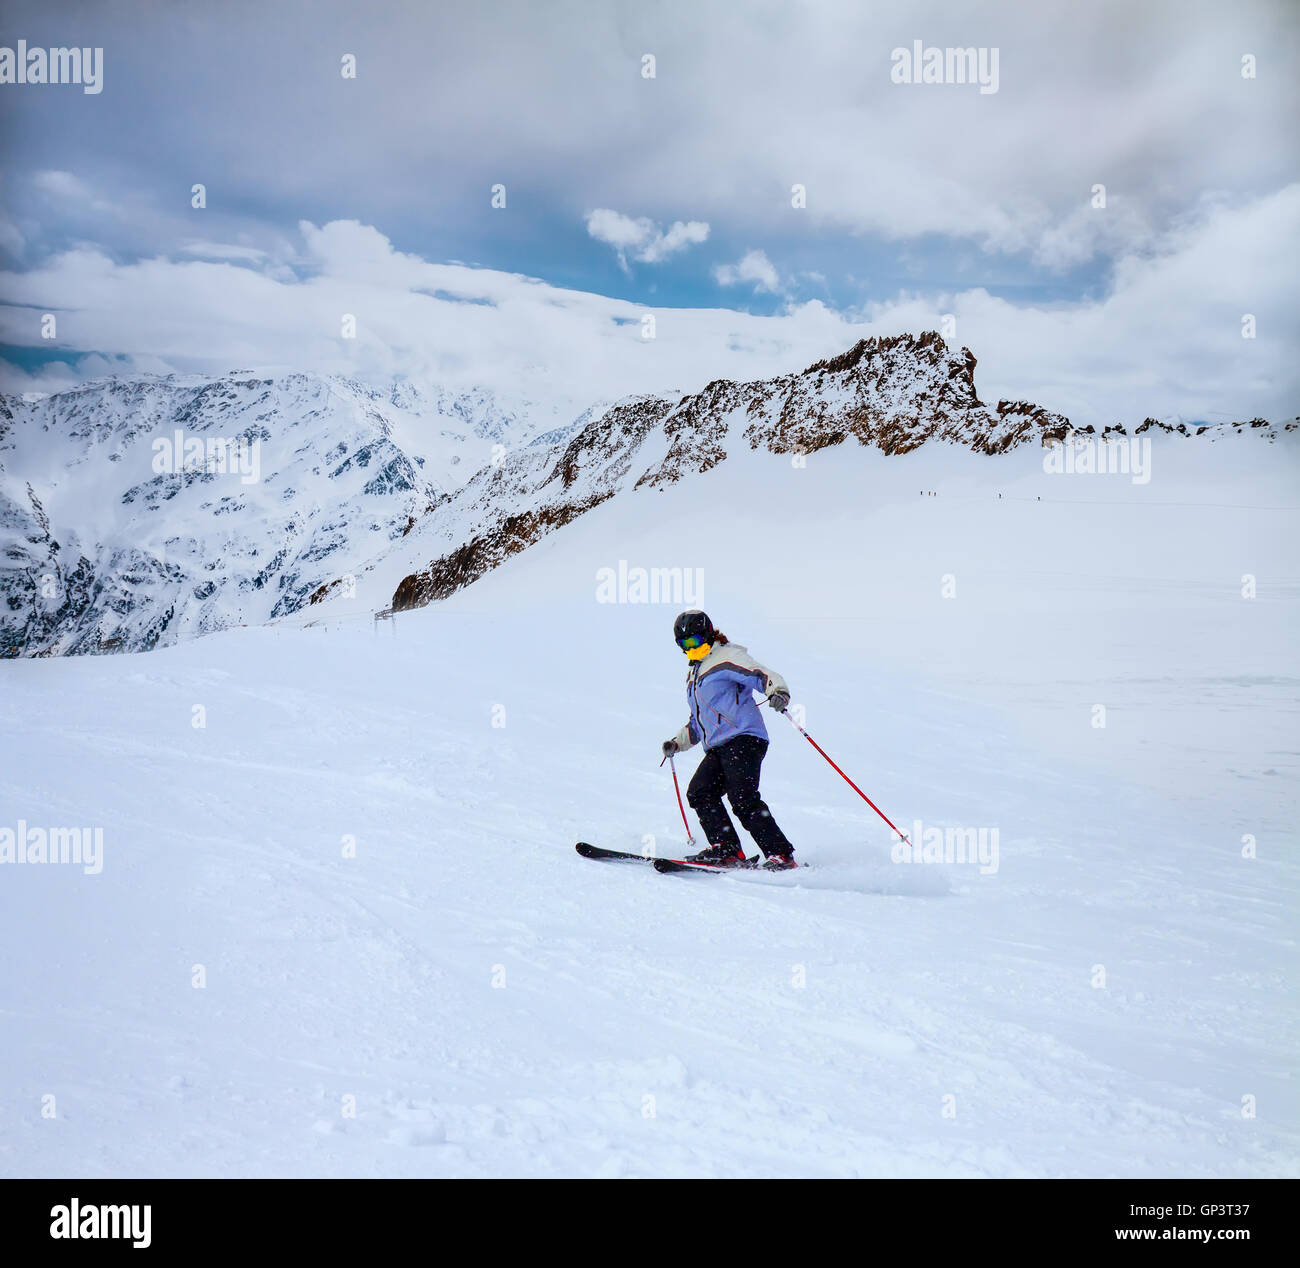 skier, extreme winter sport Stock Photo